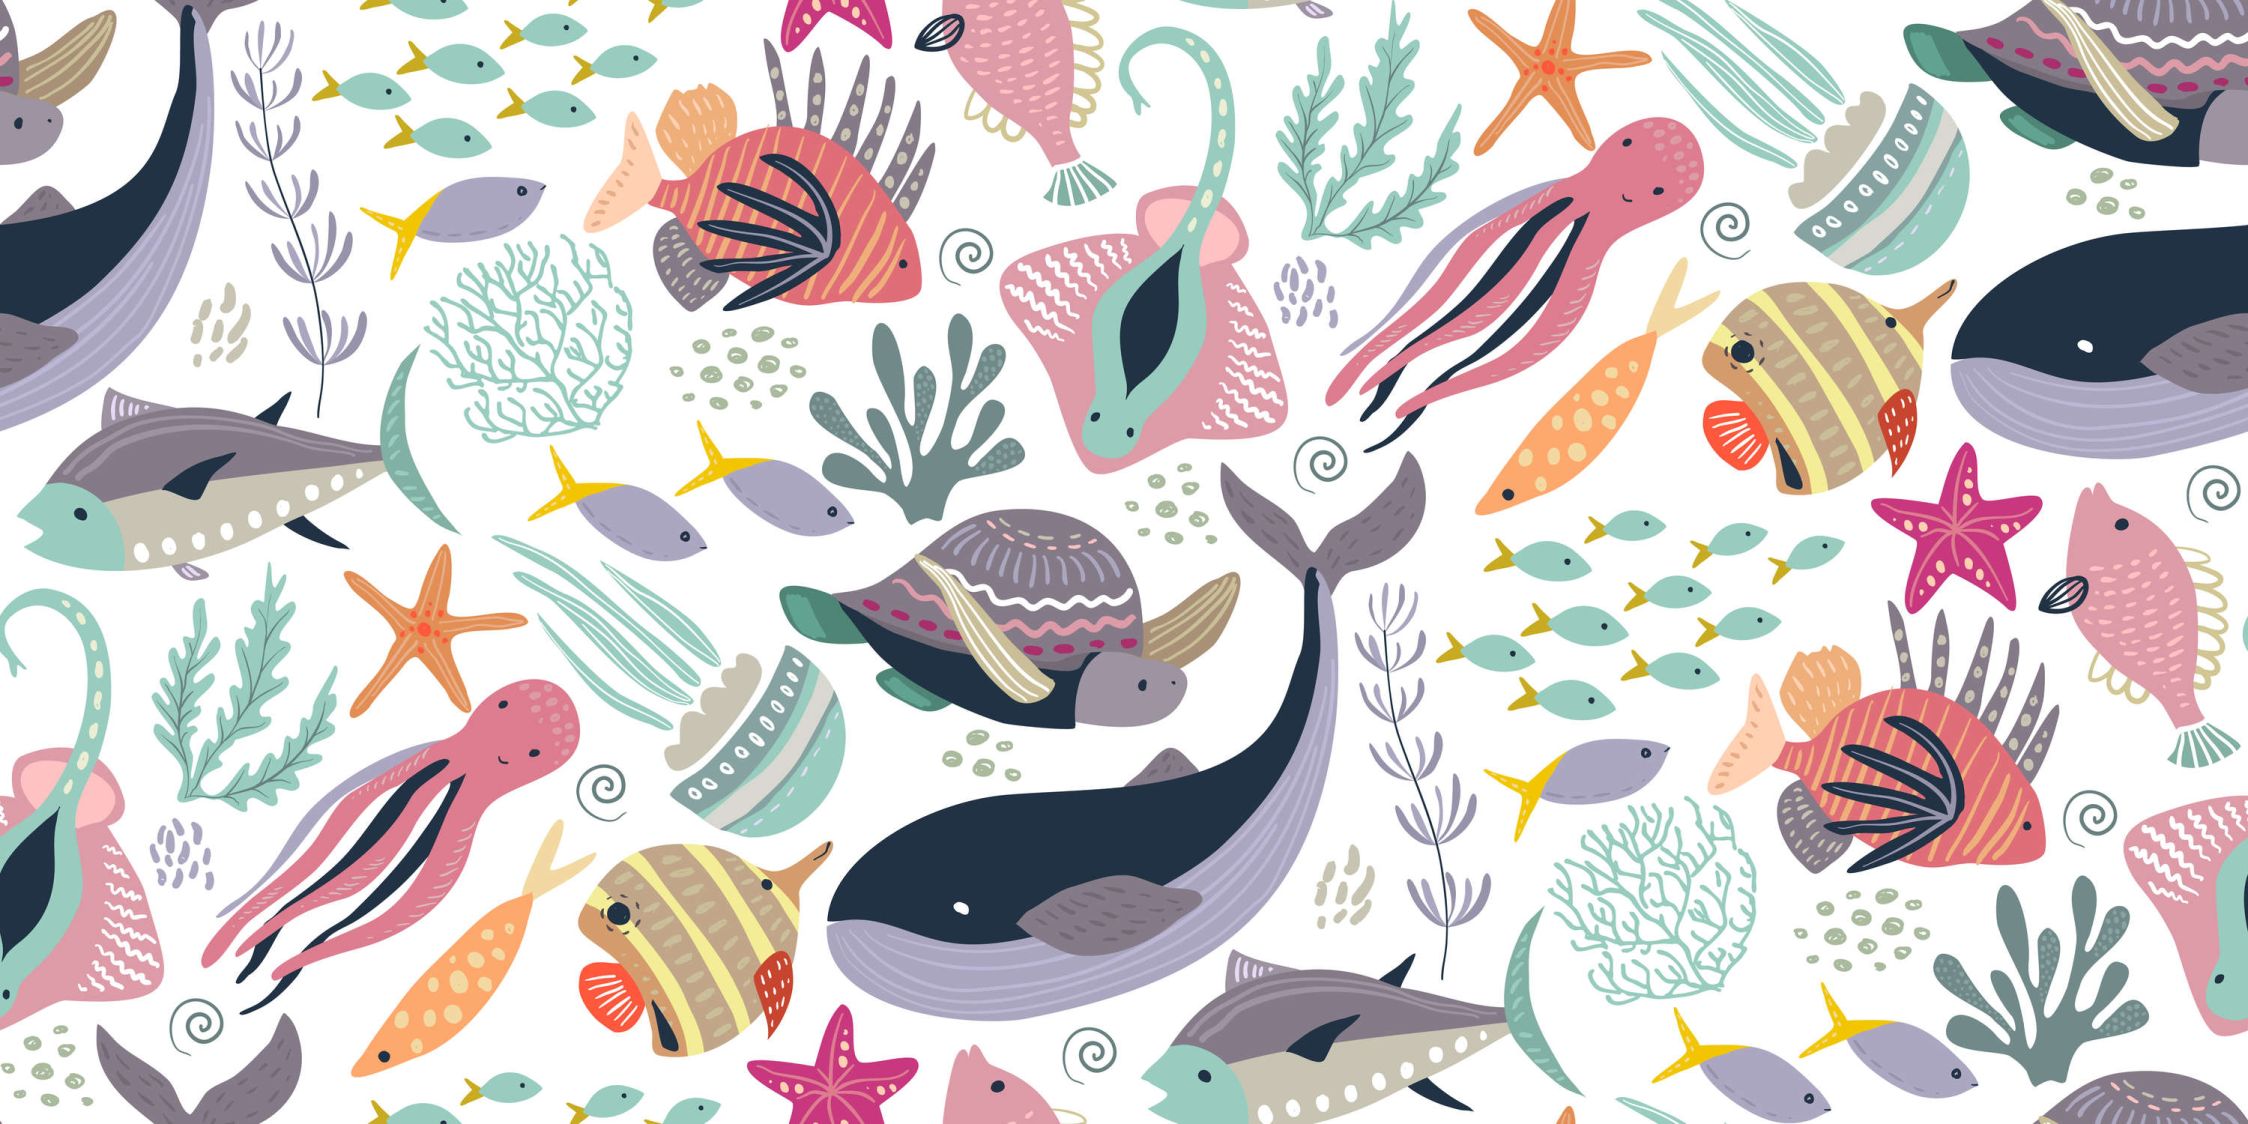             Nursery mural with underwater animals - textured non-woven
        